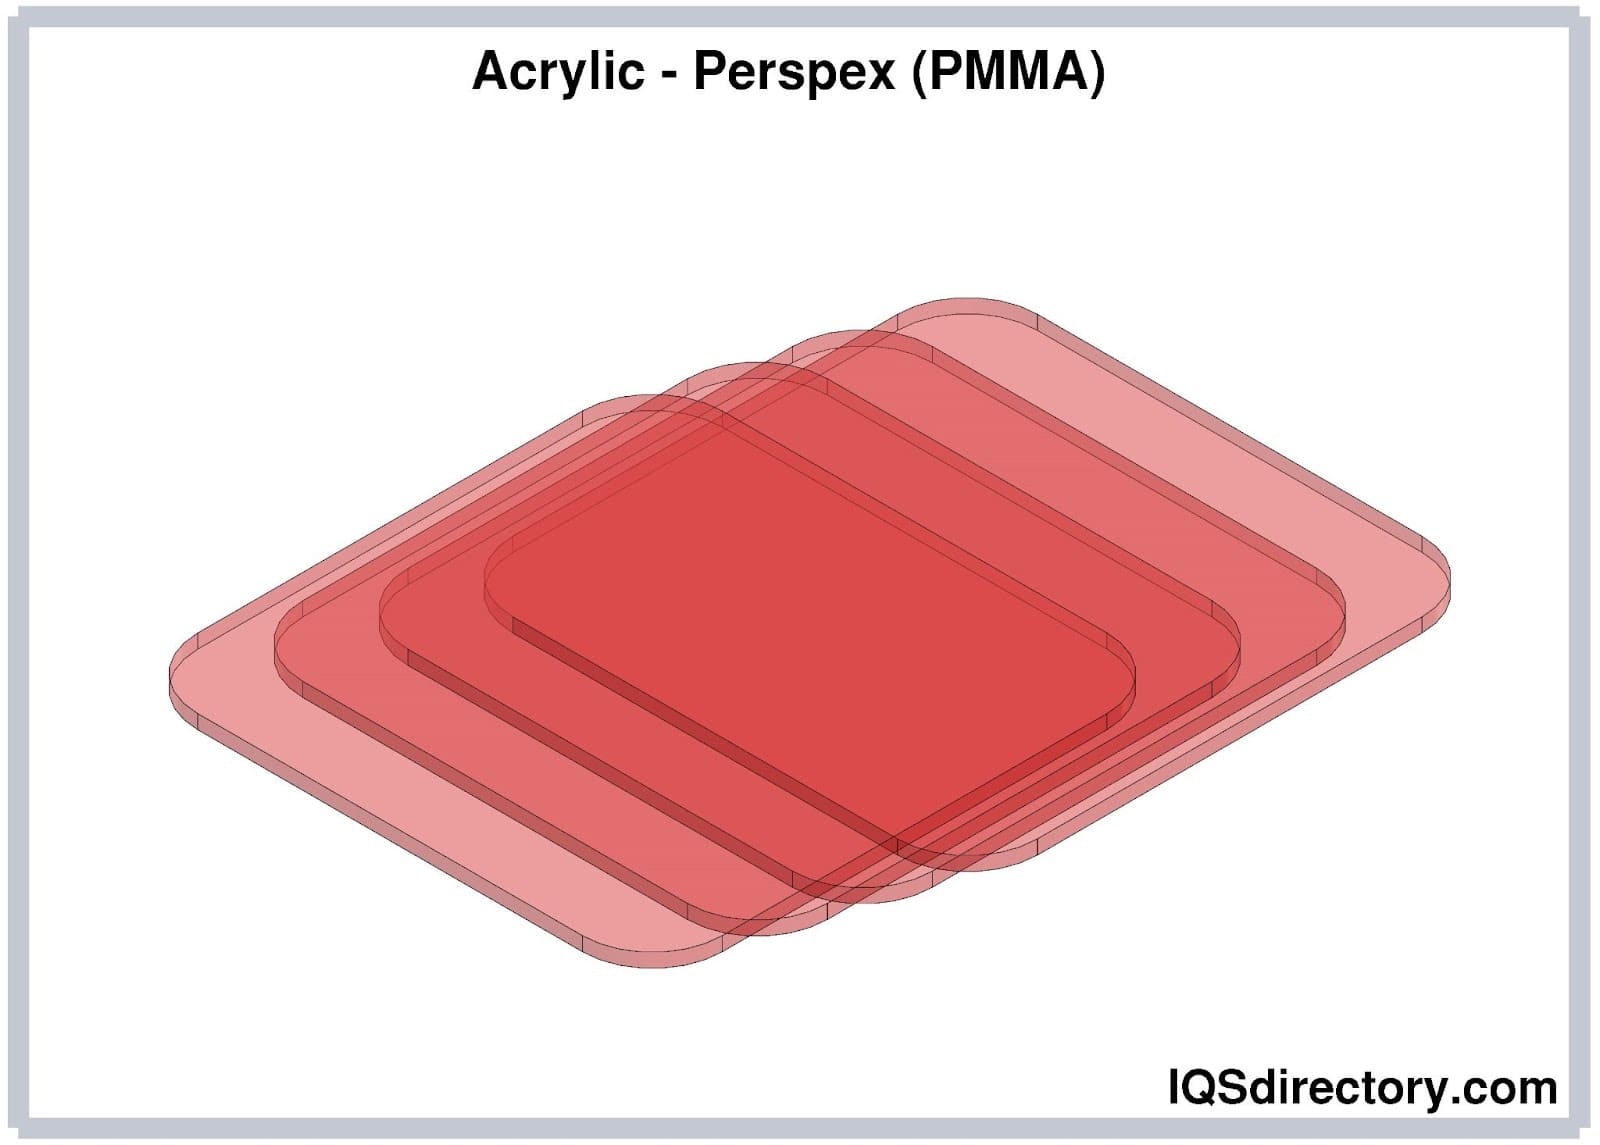 Acrylic - Perspex (PMMA)